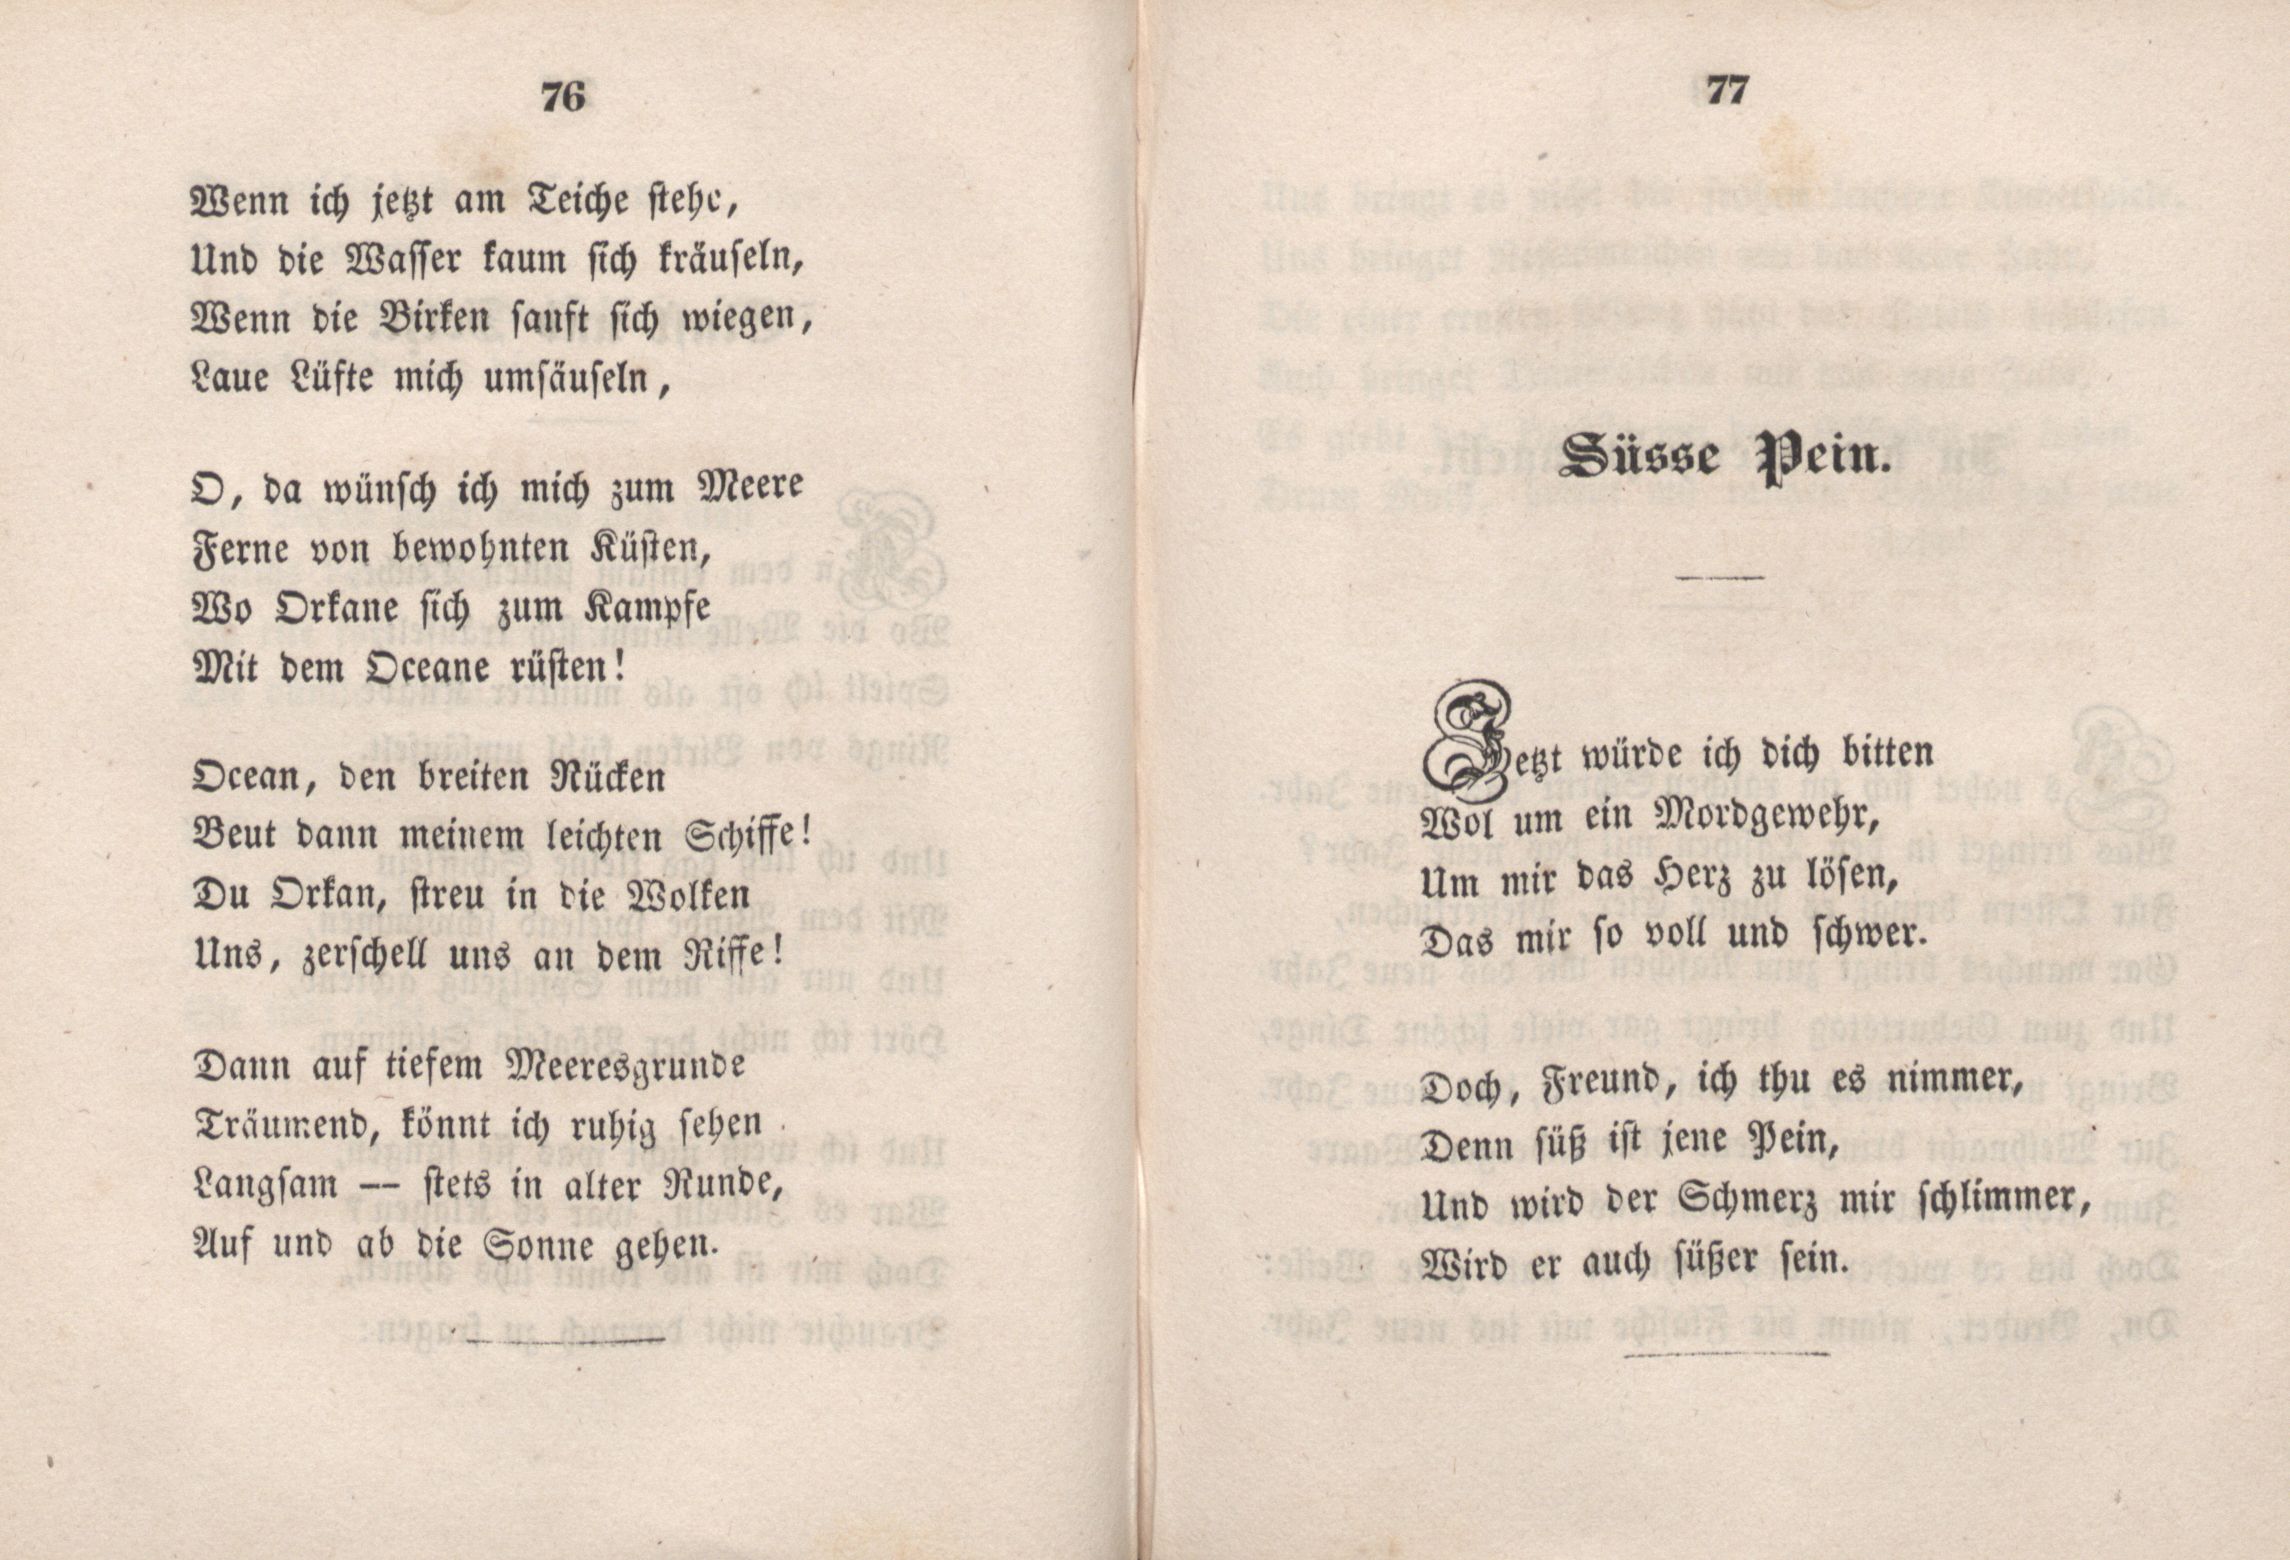 Süsse Pein (1846) | 1. (76-77) Main body of text